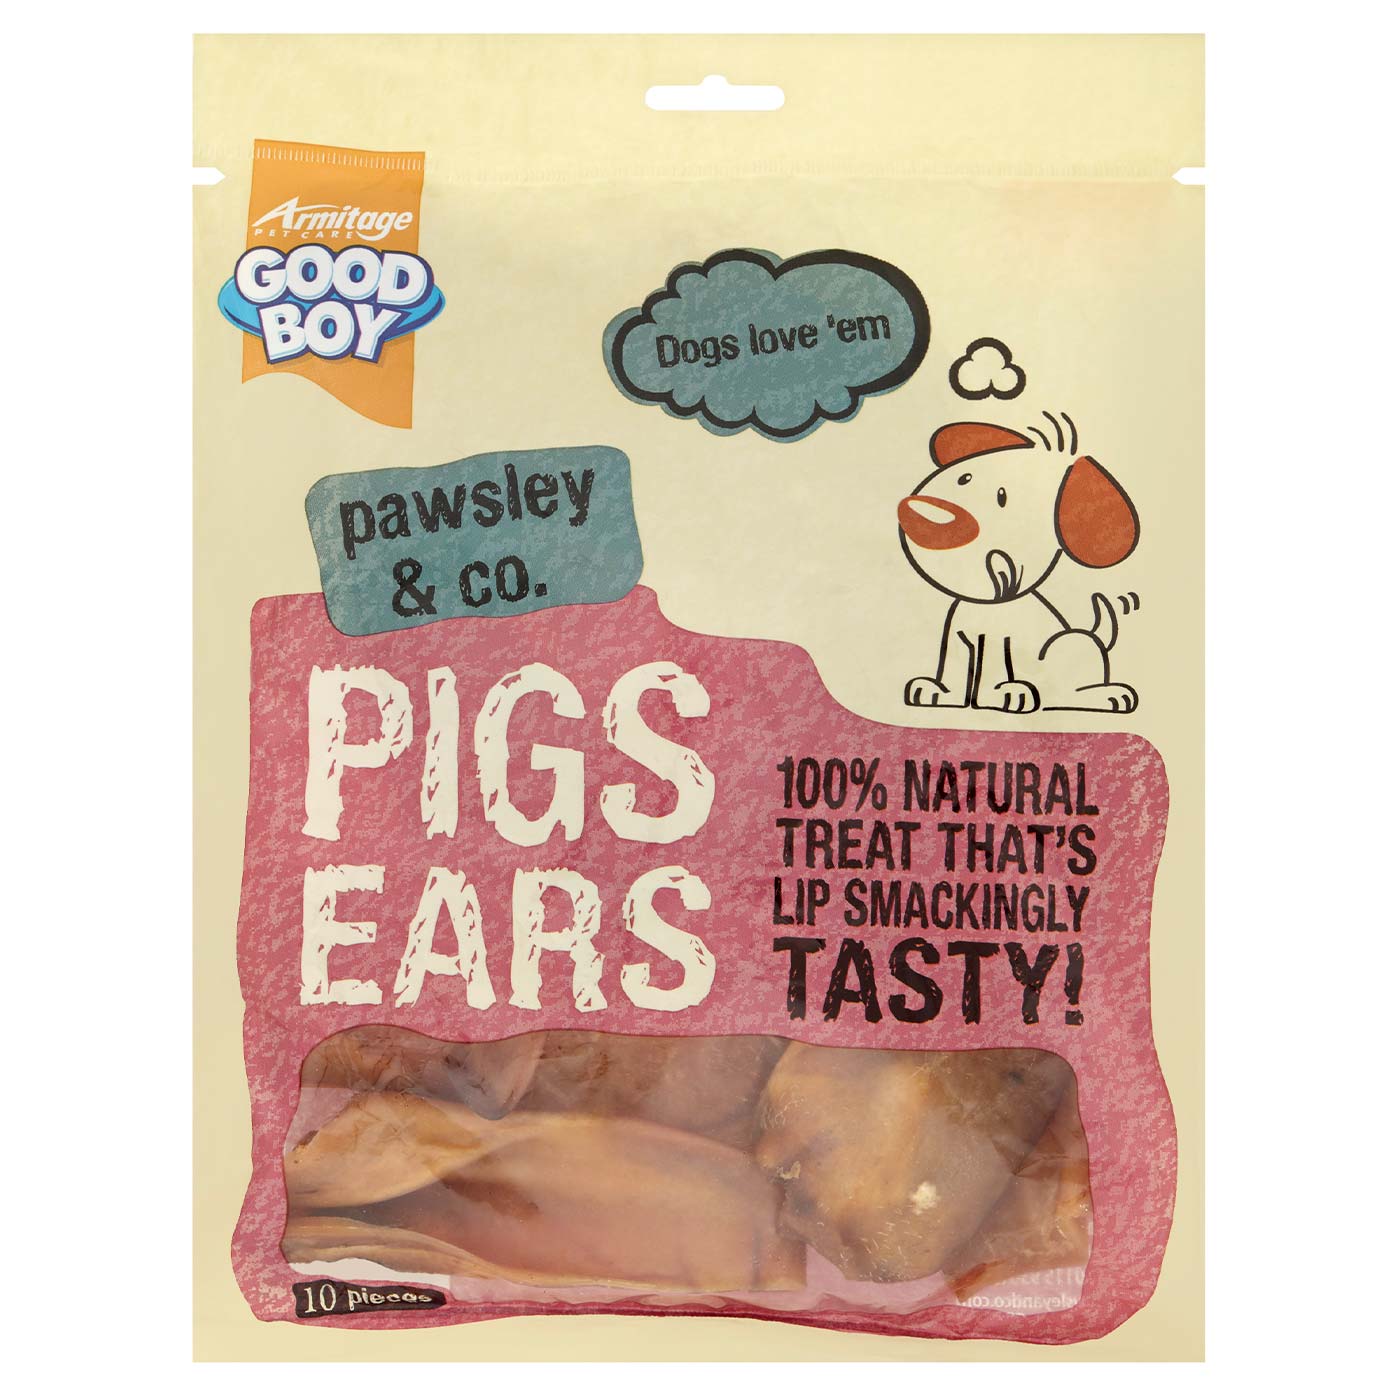 Good Boy Pigs Ears 400g